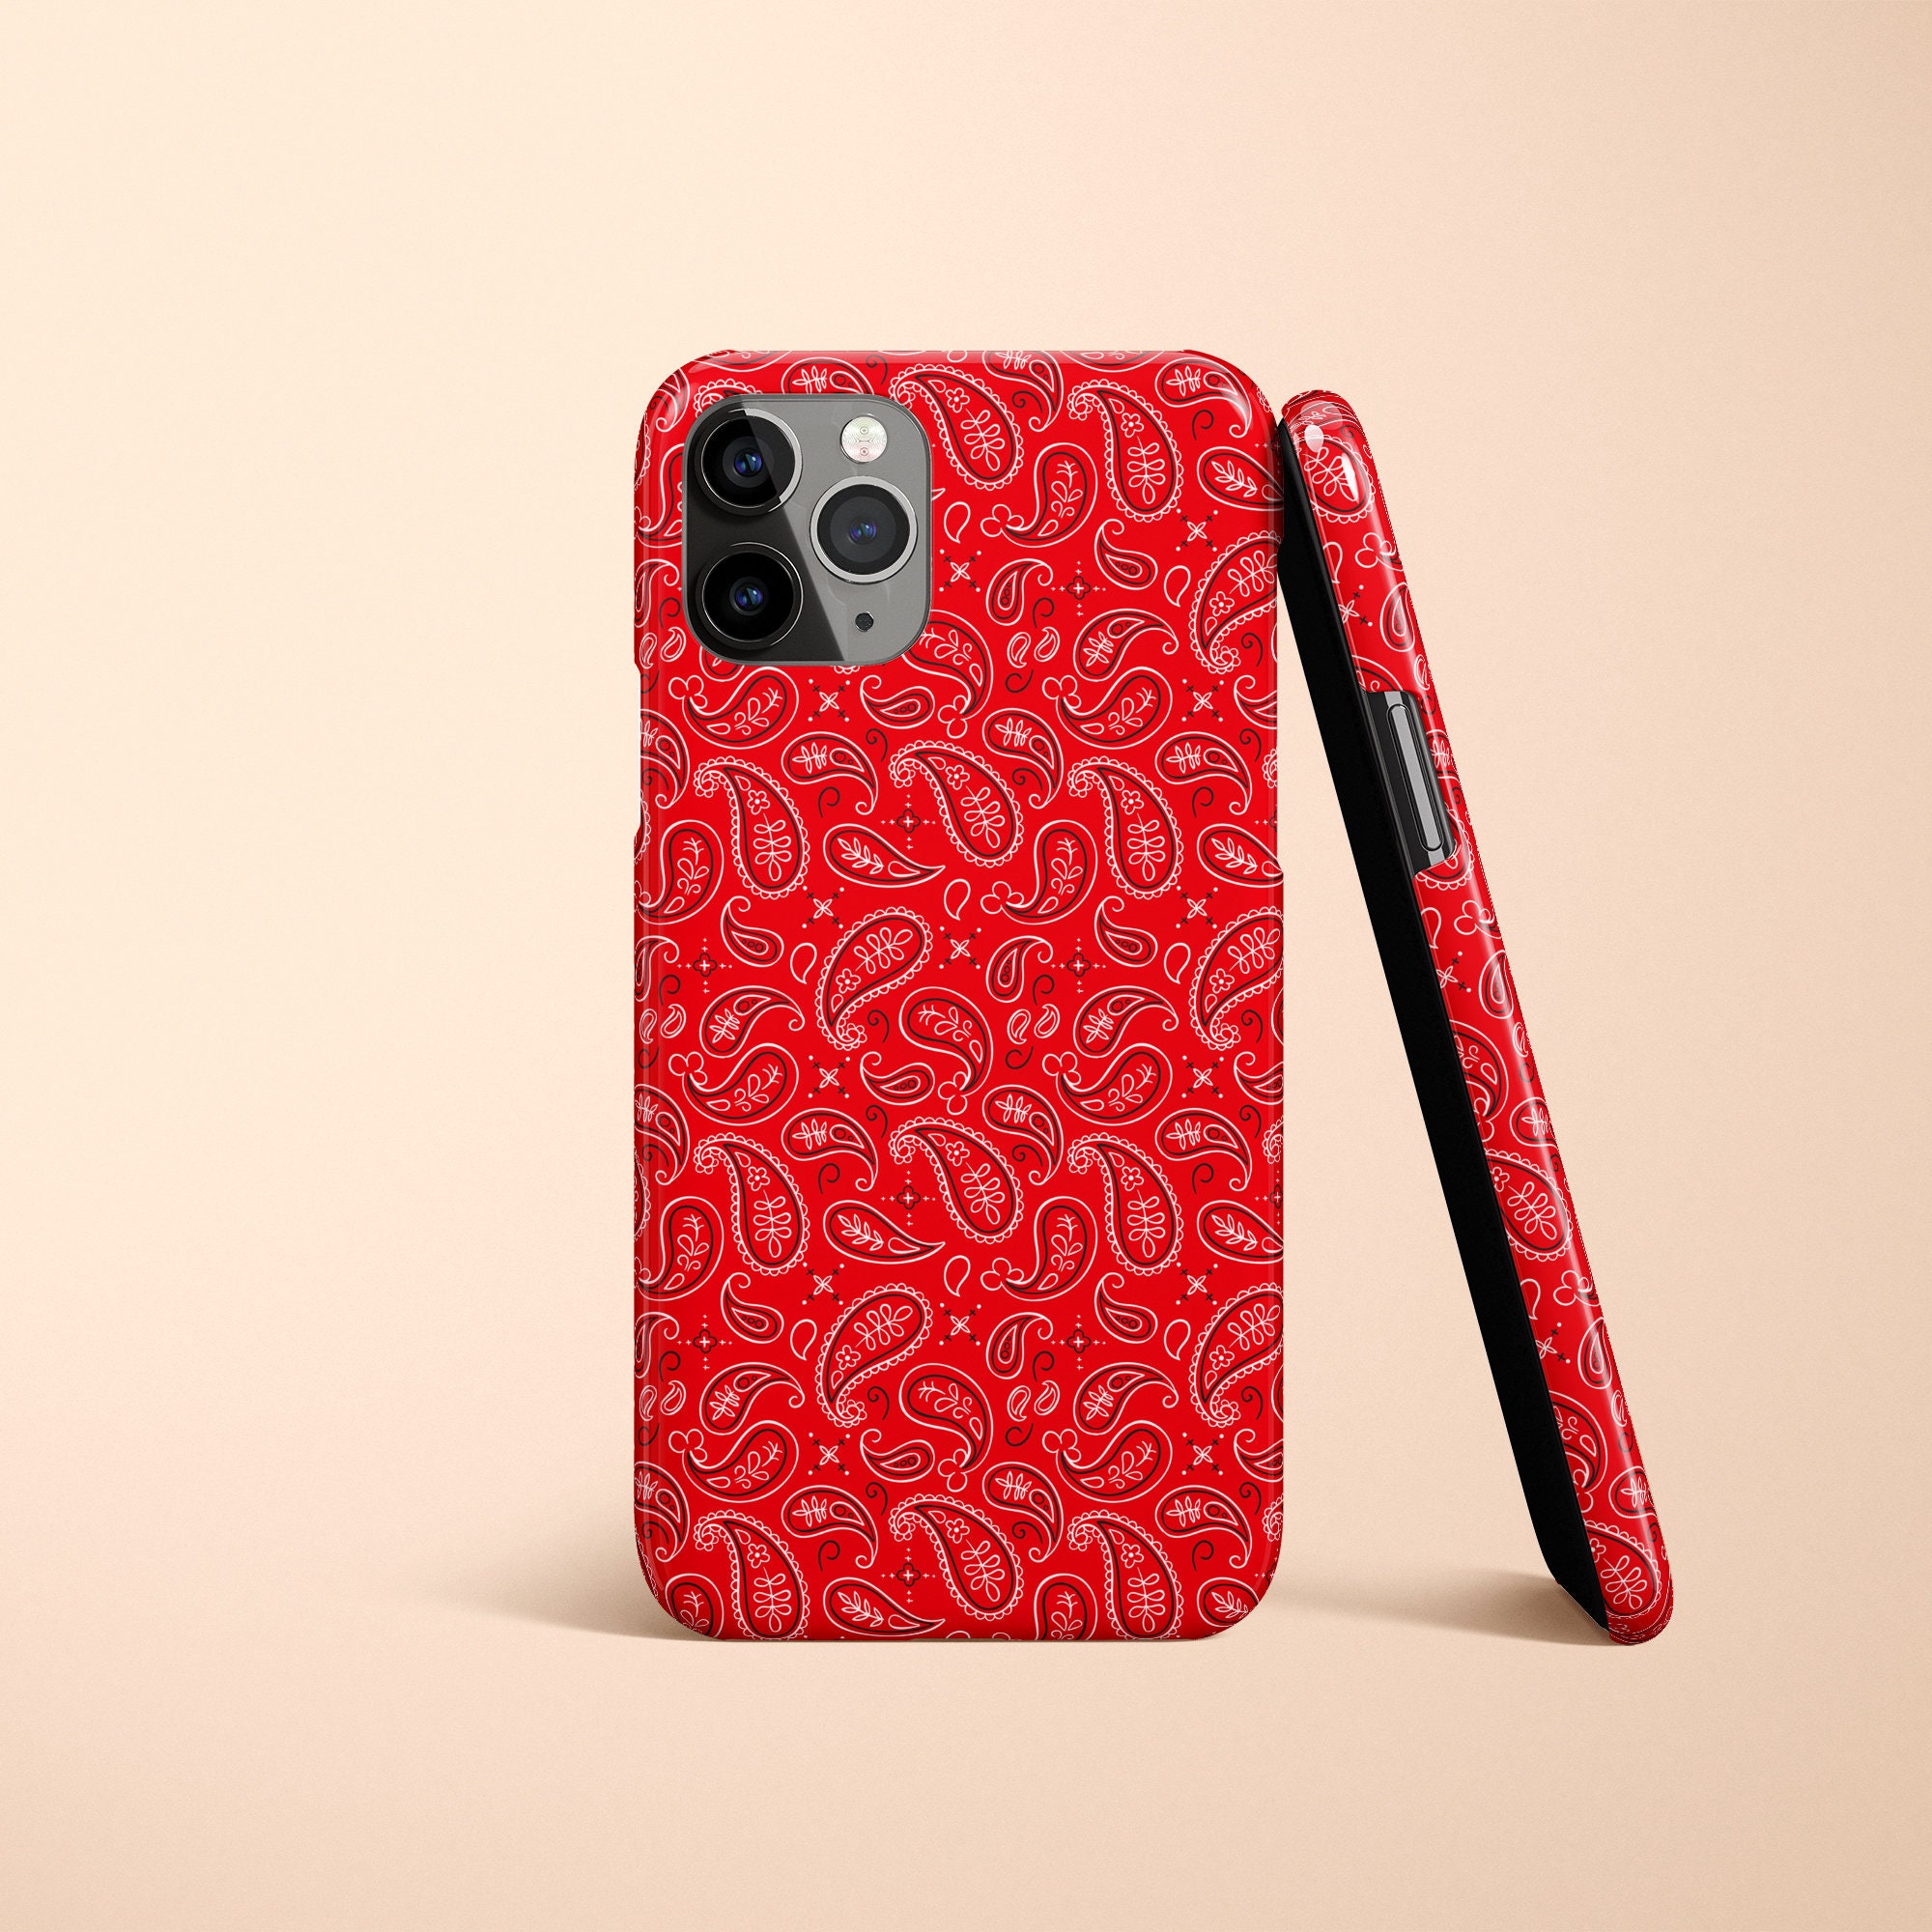 SUPREME RED BANDANA iPhone 12 Pro Max Case Cover